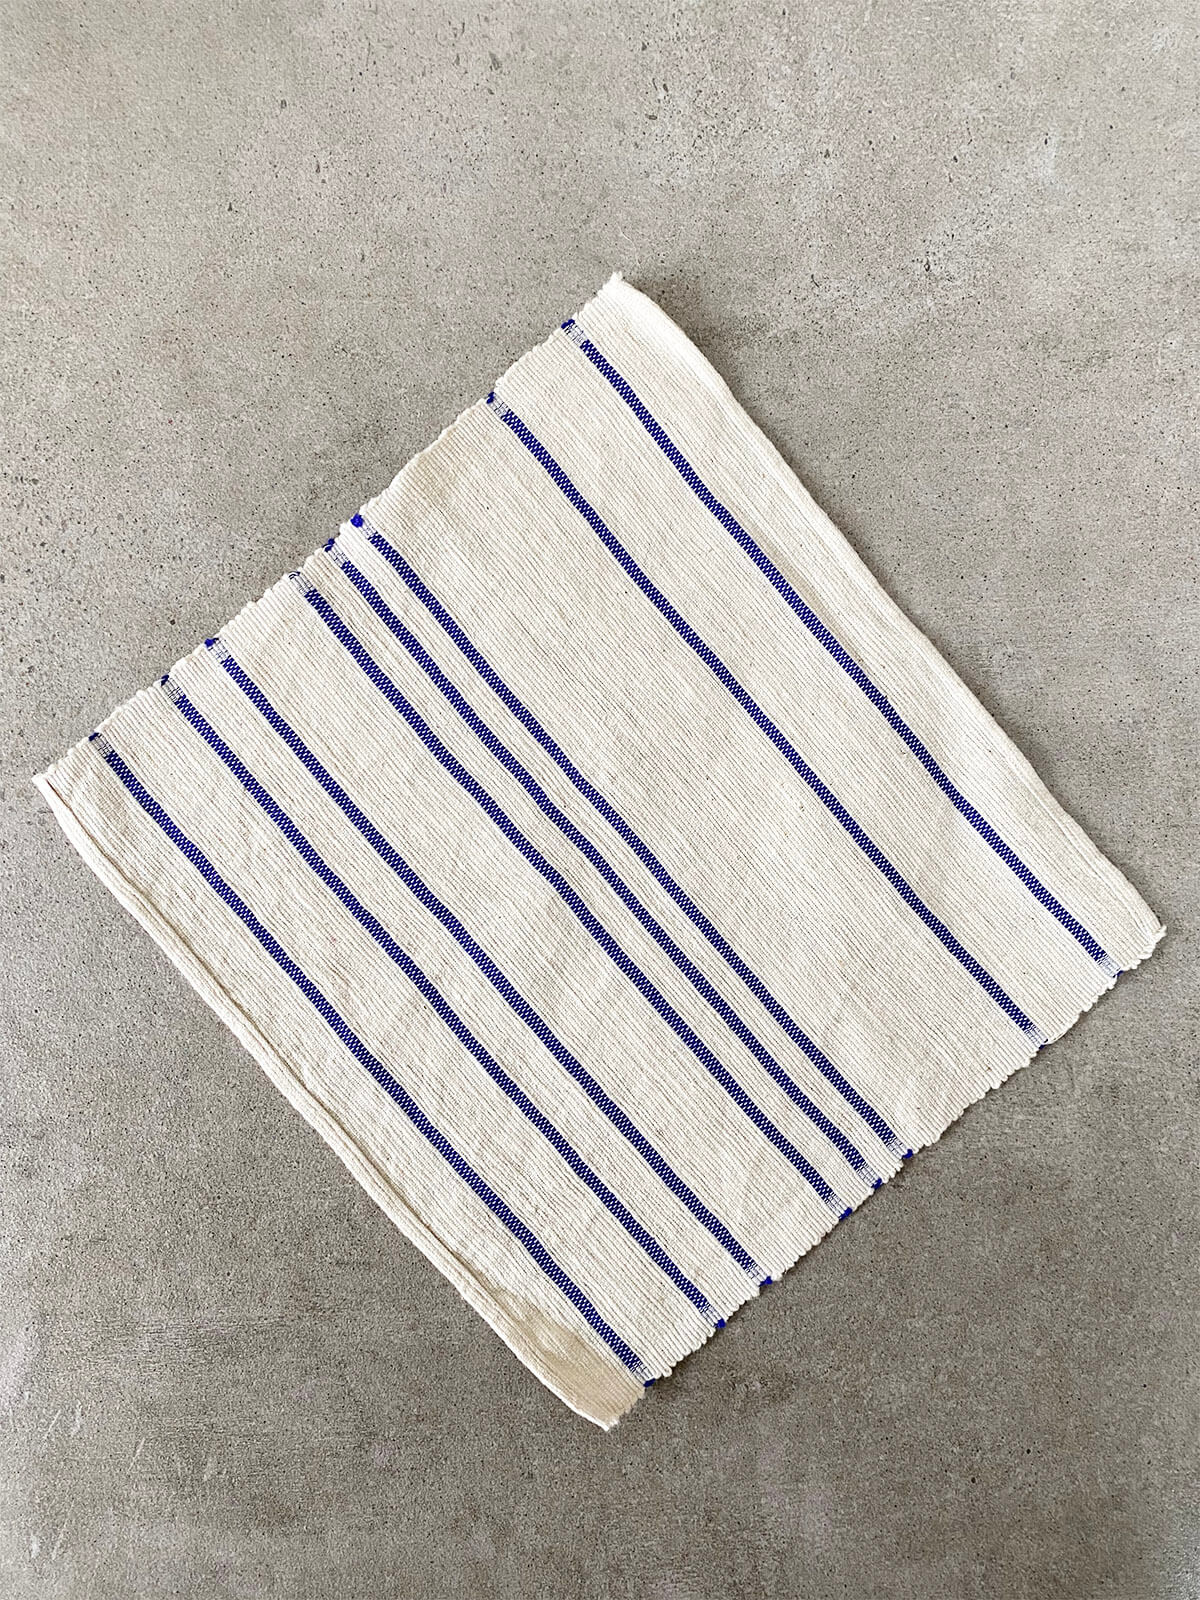 How to fold a mini hand towel (oshibori)